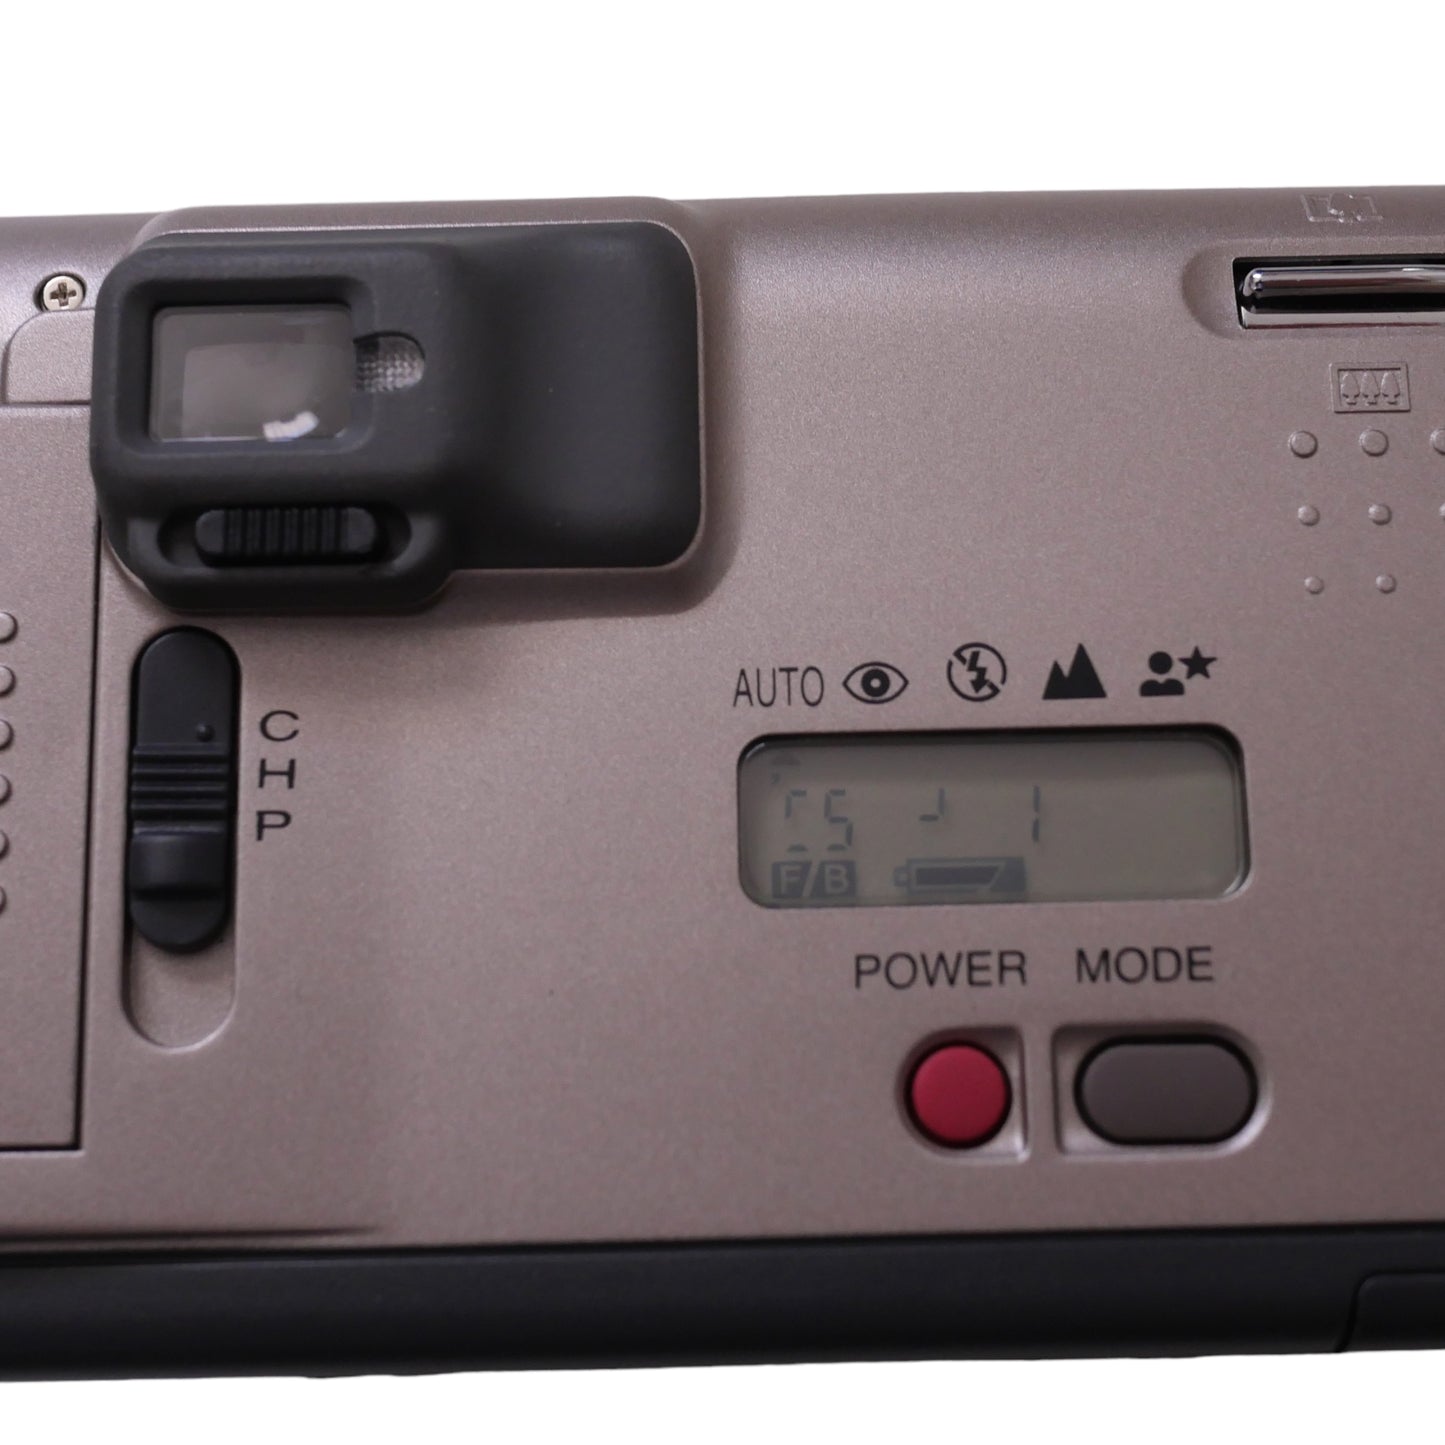 Fujifilm Endeavor 400ix Zoom Film Zoom Camera